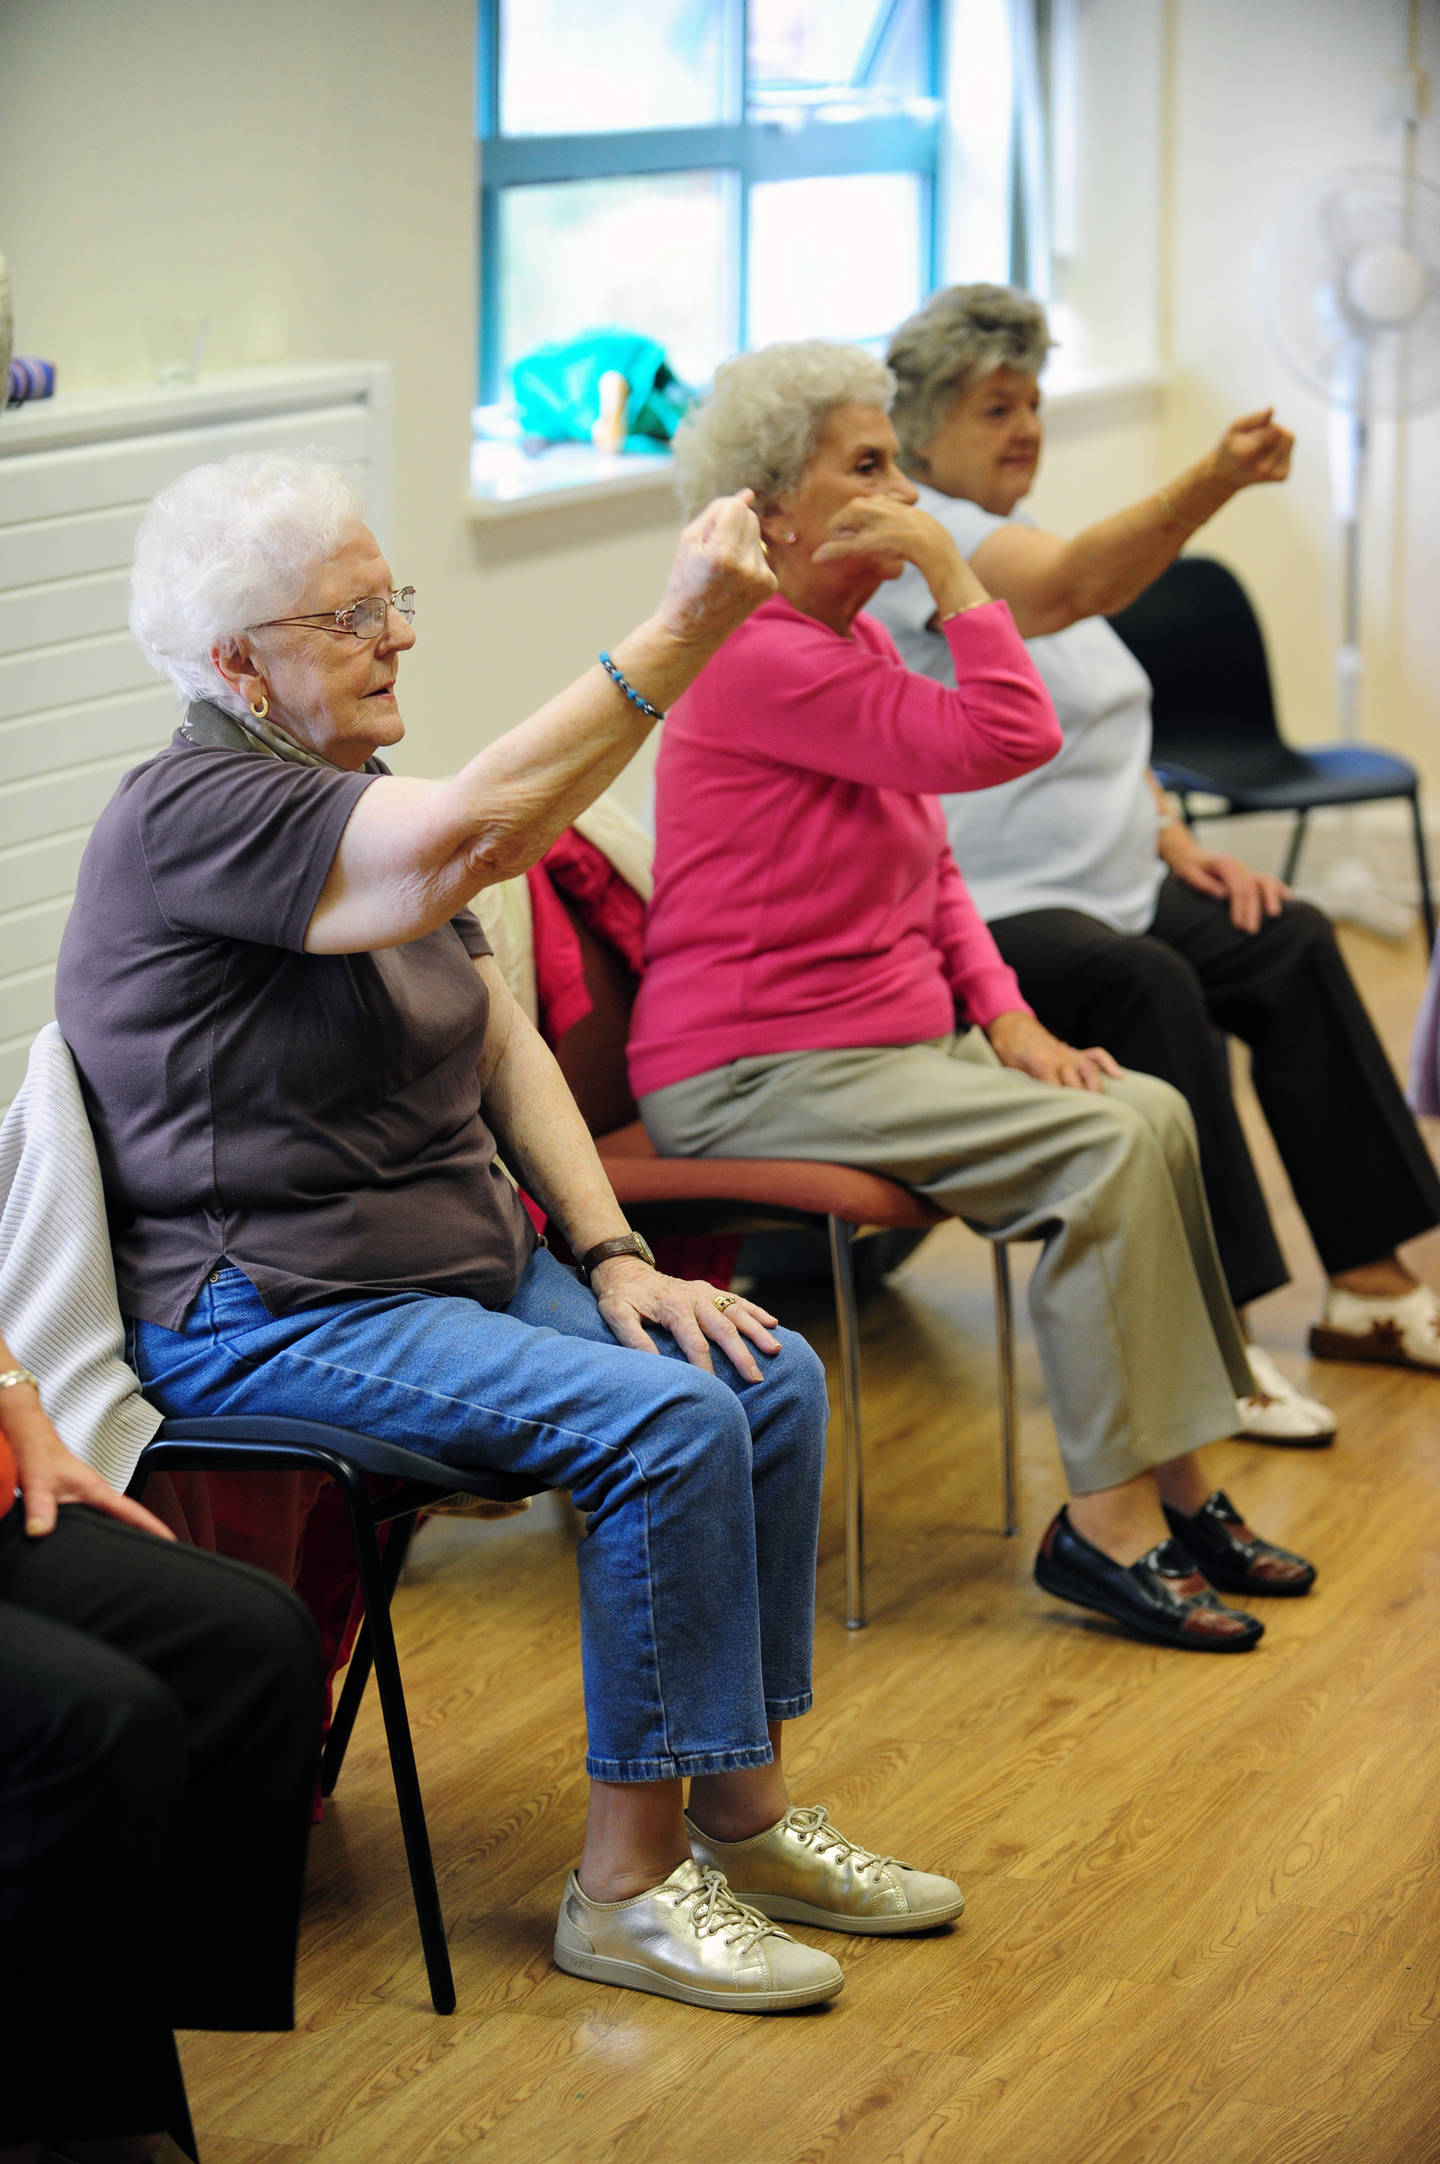 Older people being active